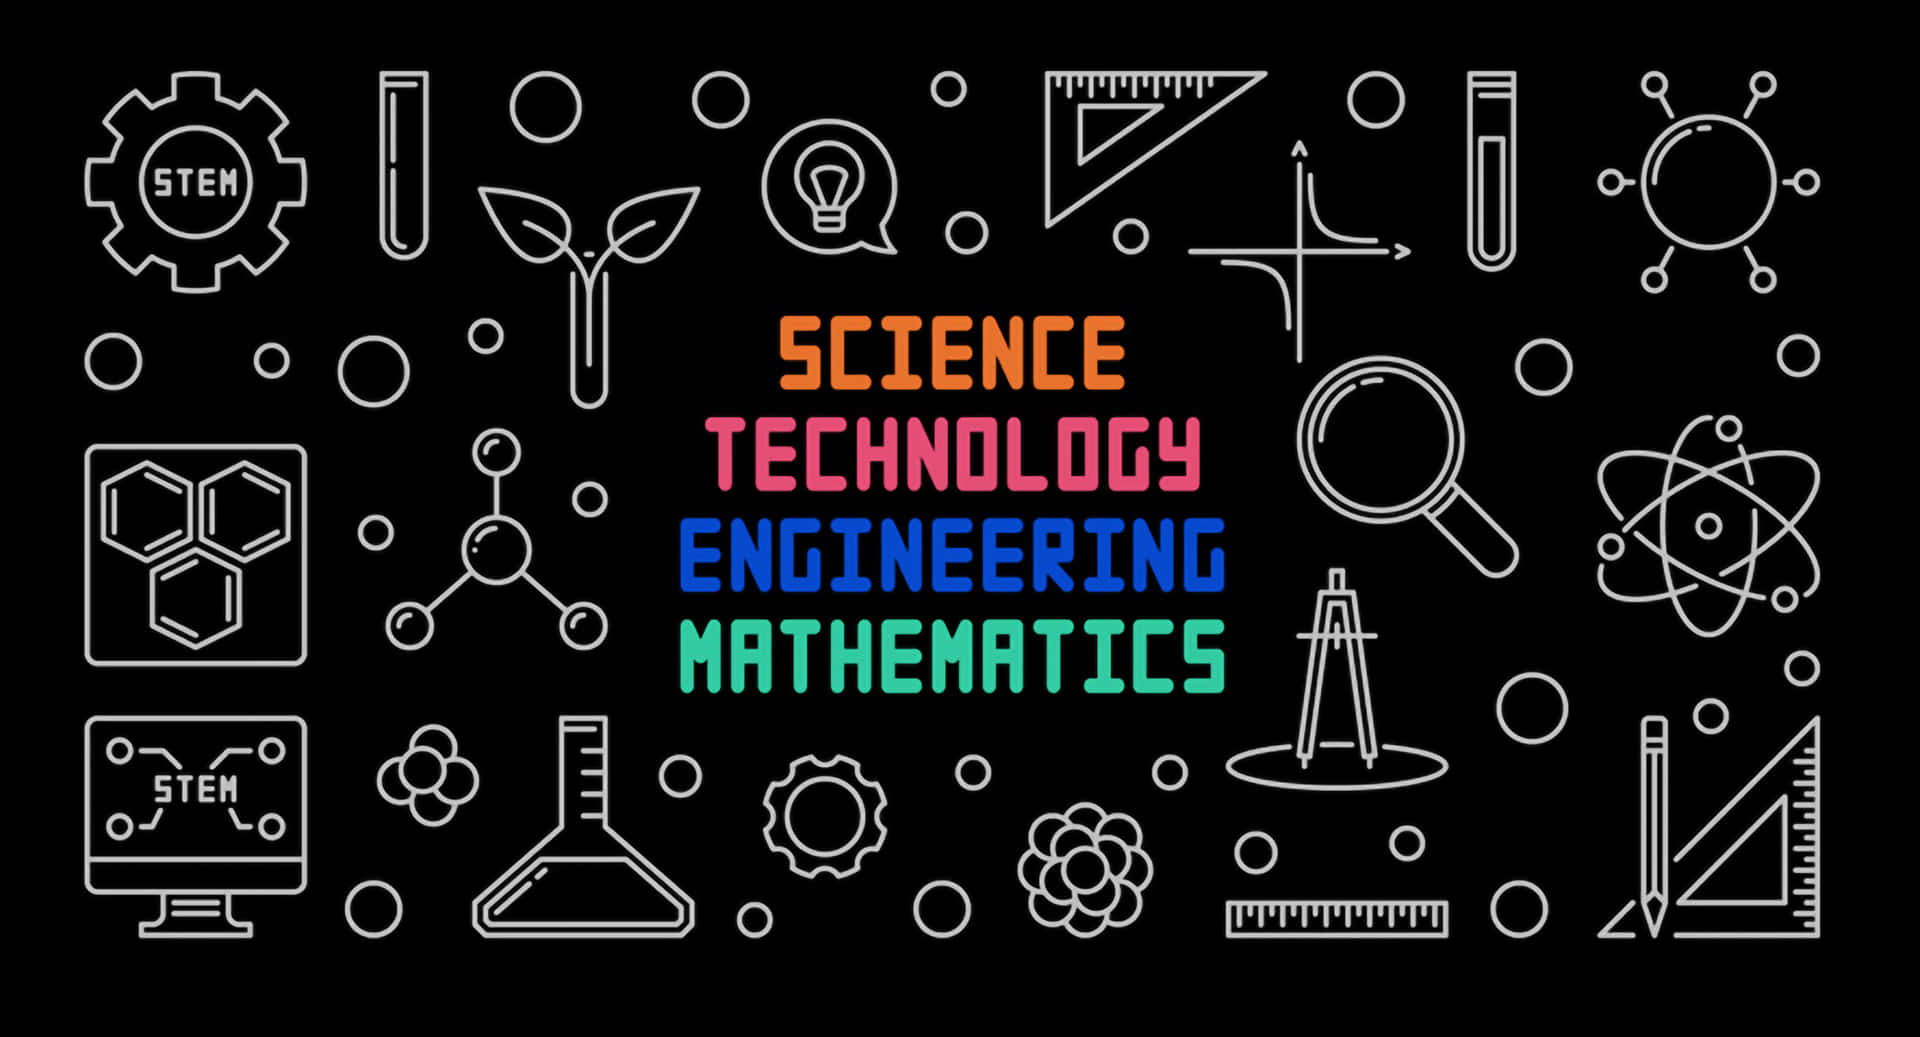 Science Technology Engineering Mathematics